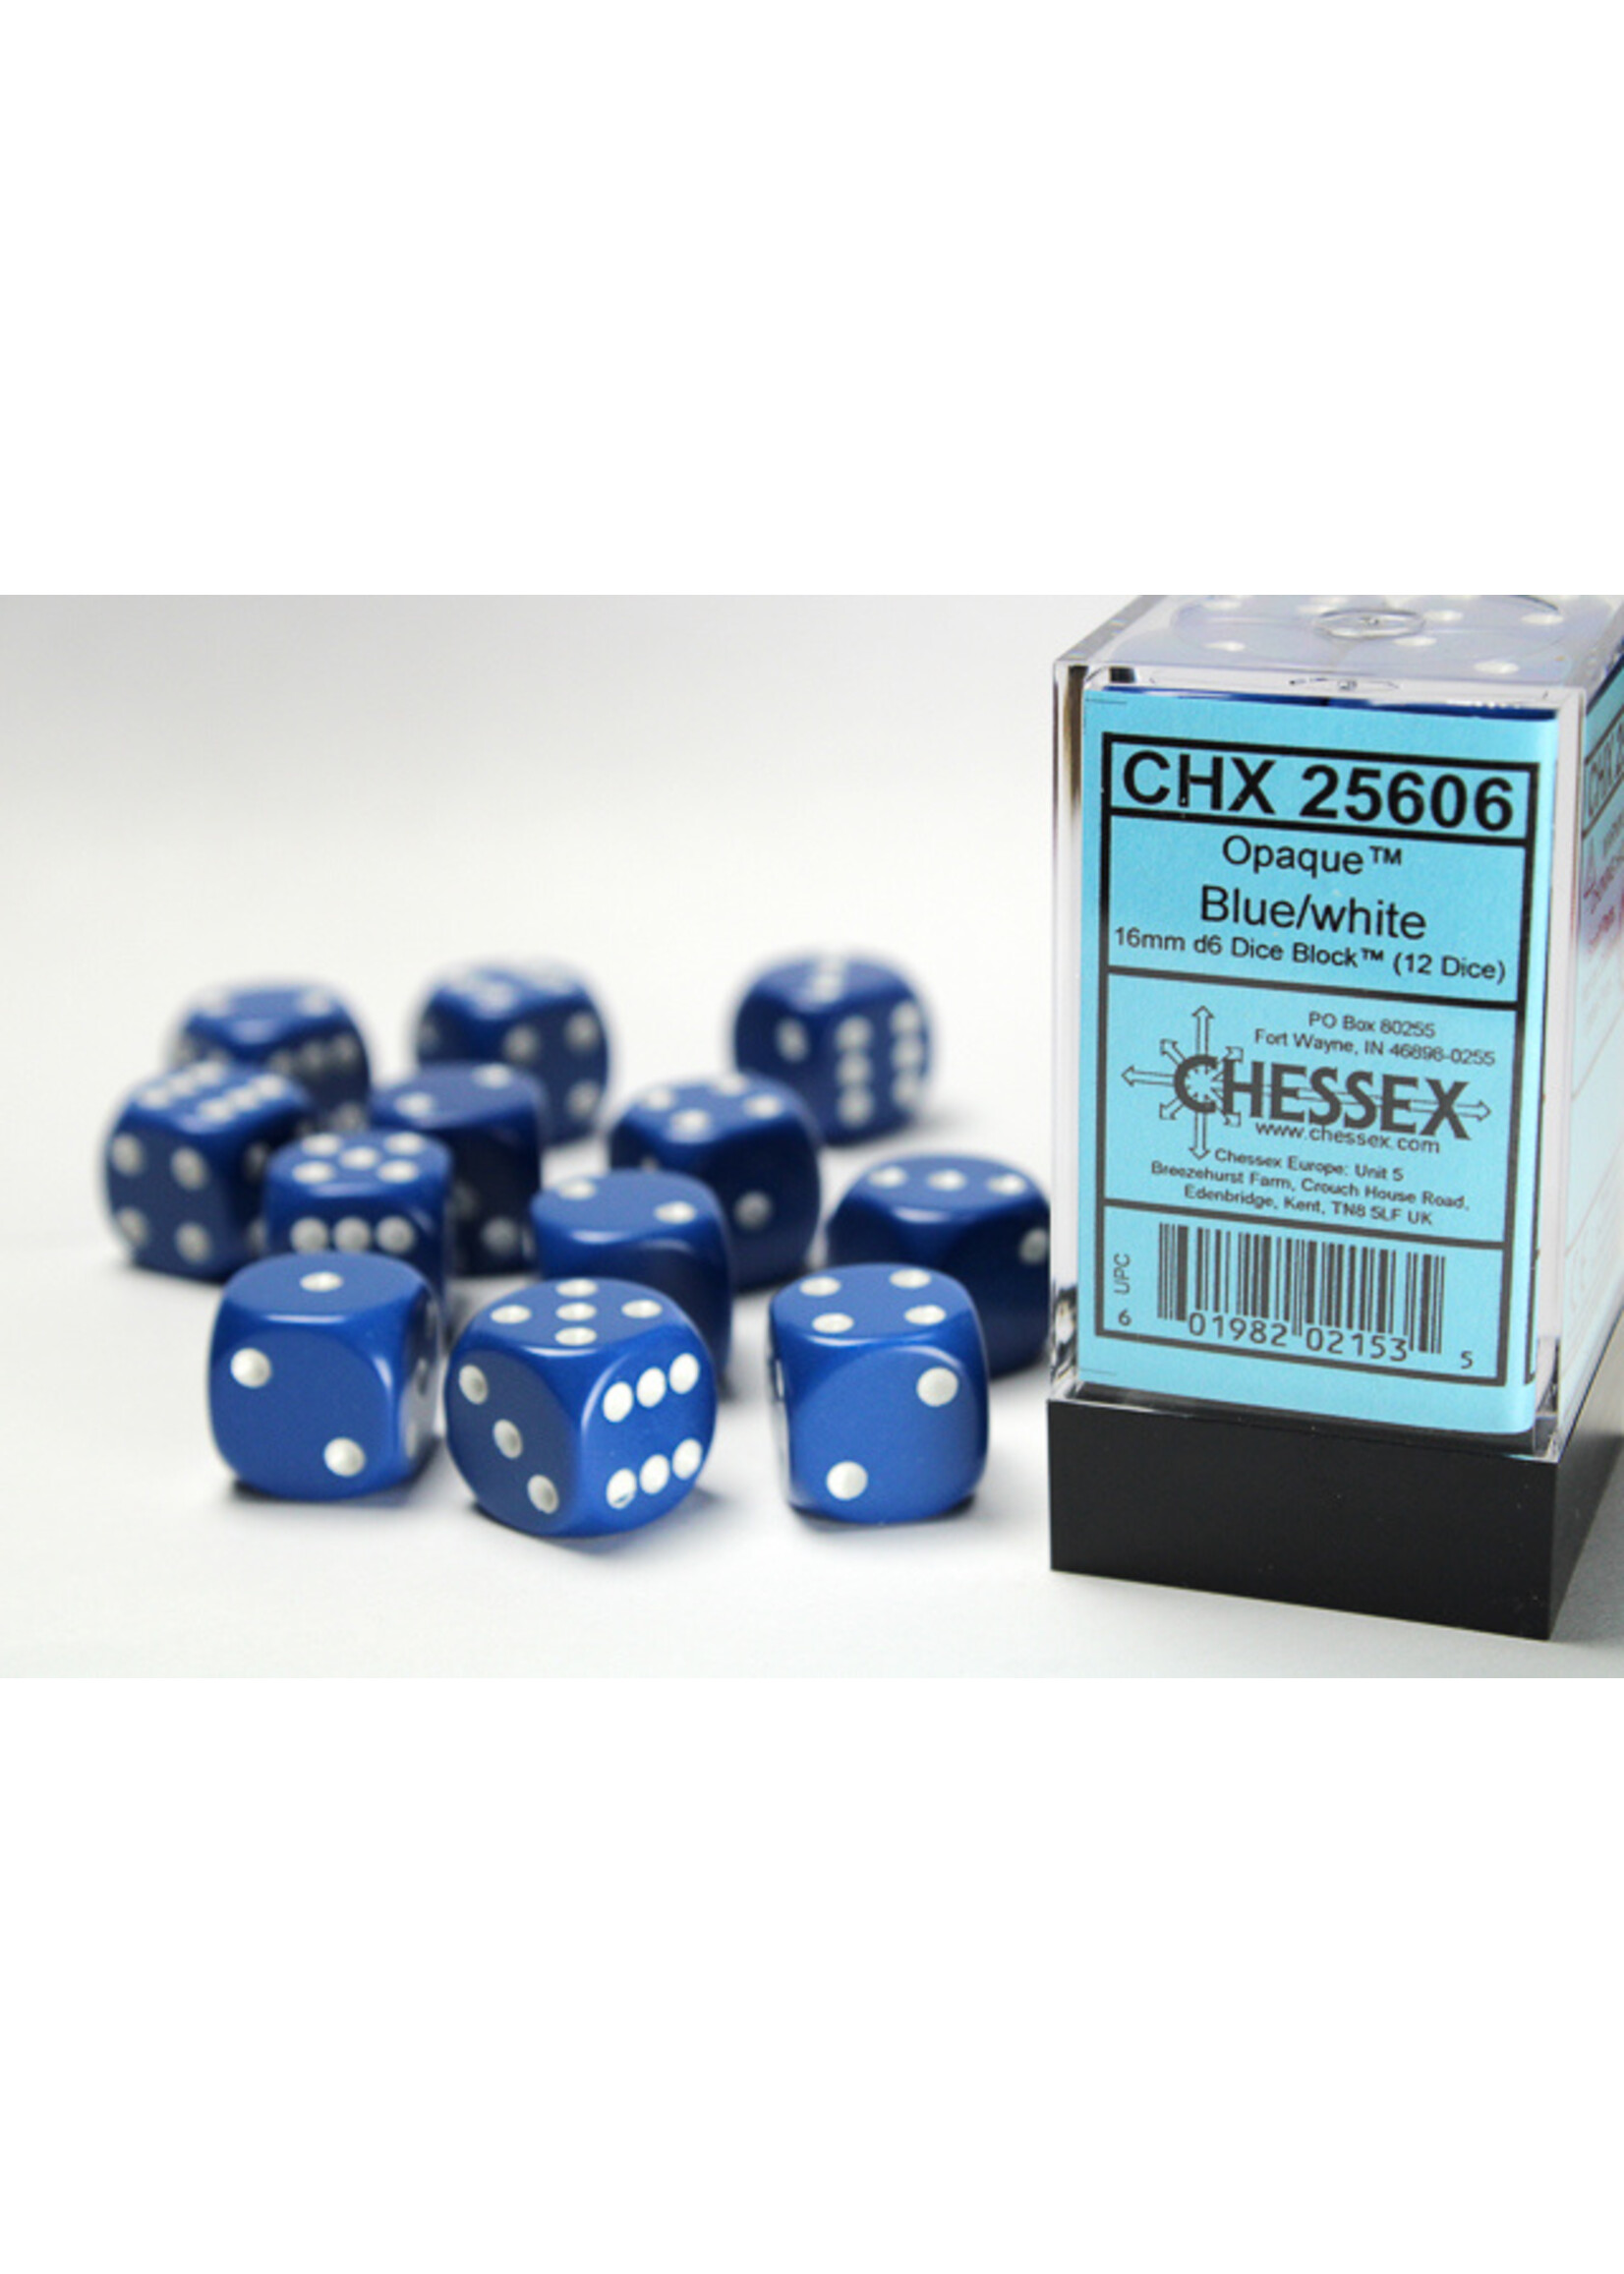 Chessex OPAQ 12d6 blue/white